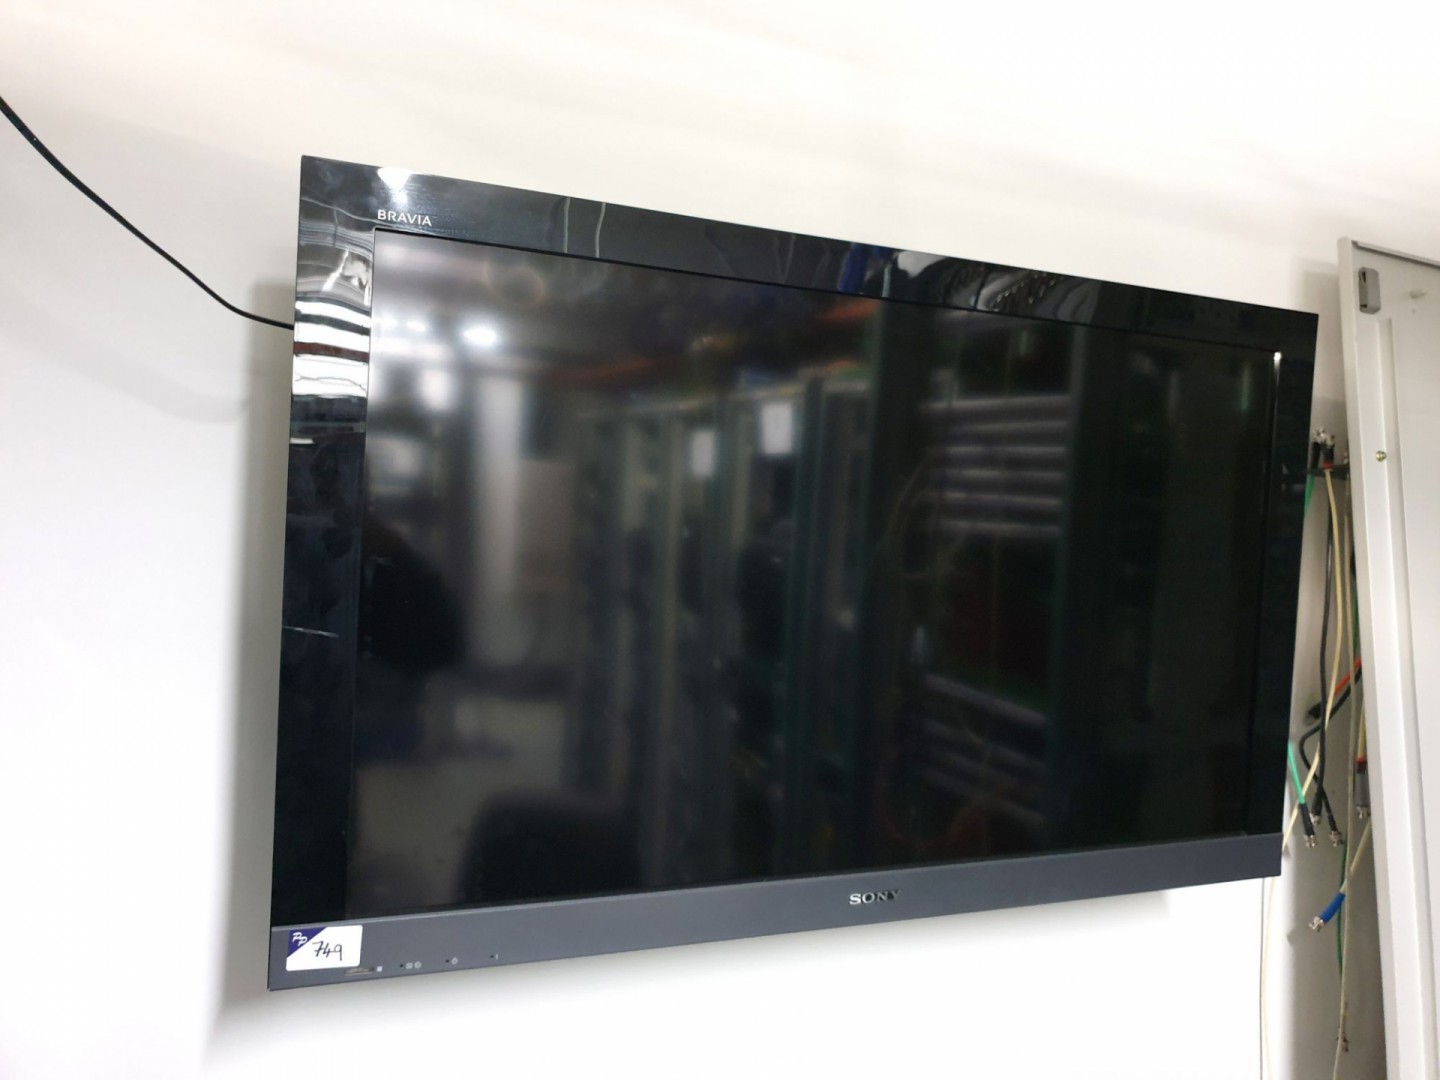 Sony Bravia KDL-40EX401 LCD TV on wall bracket